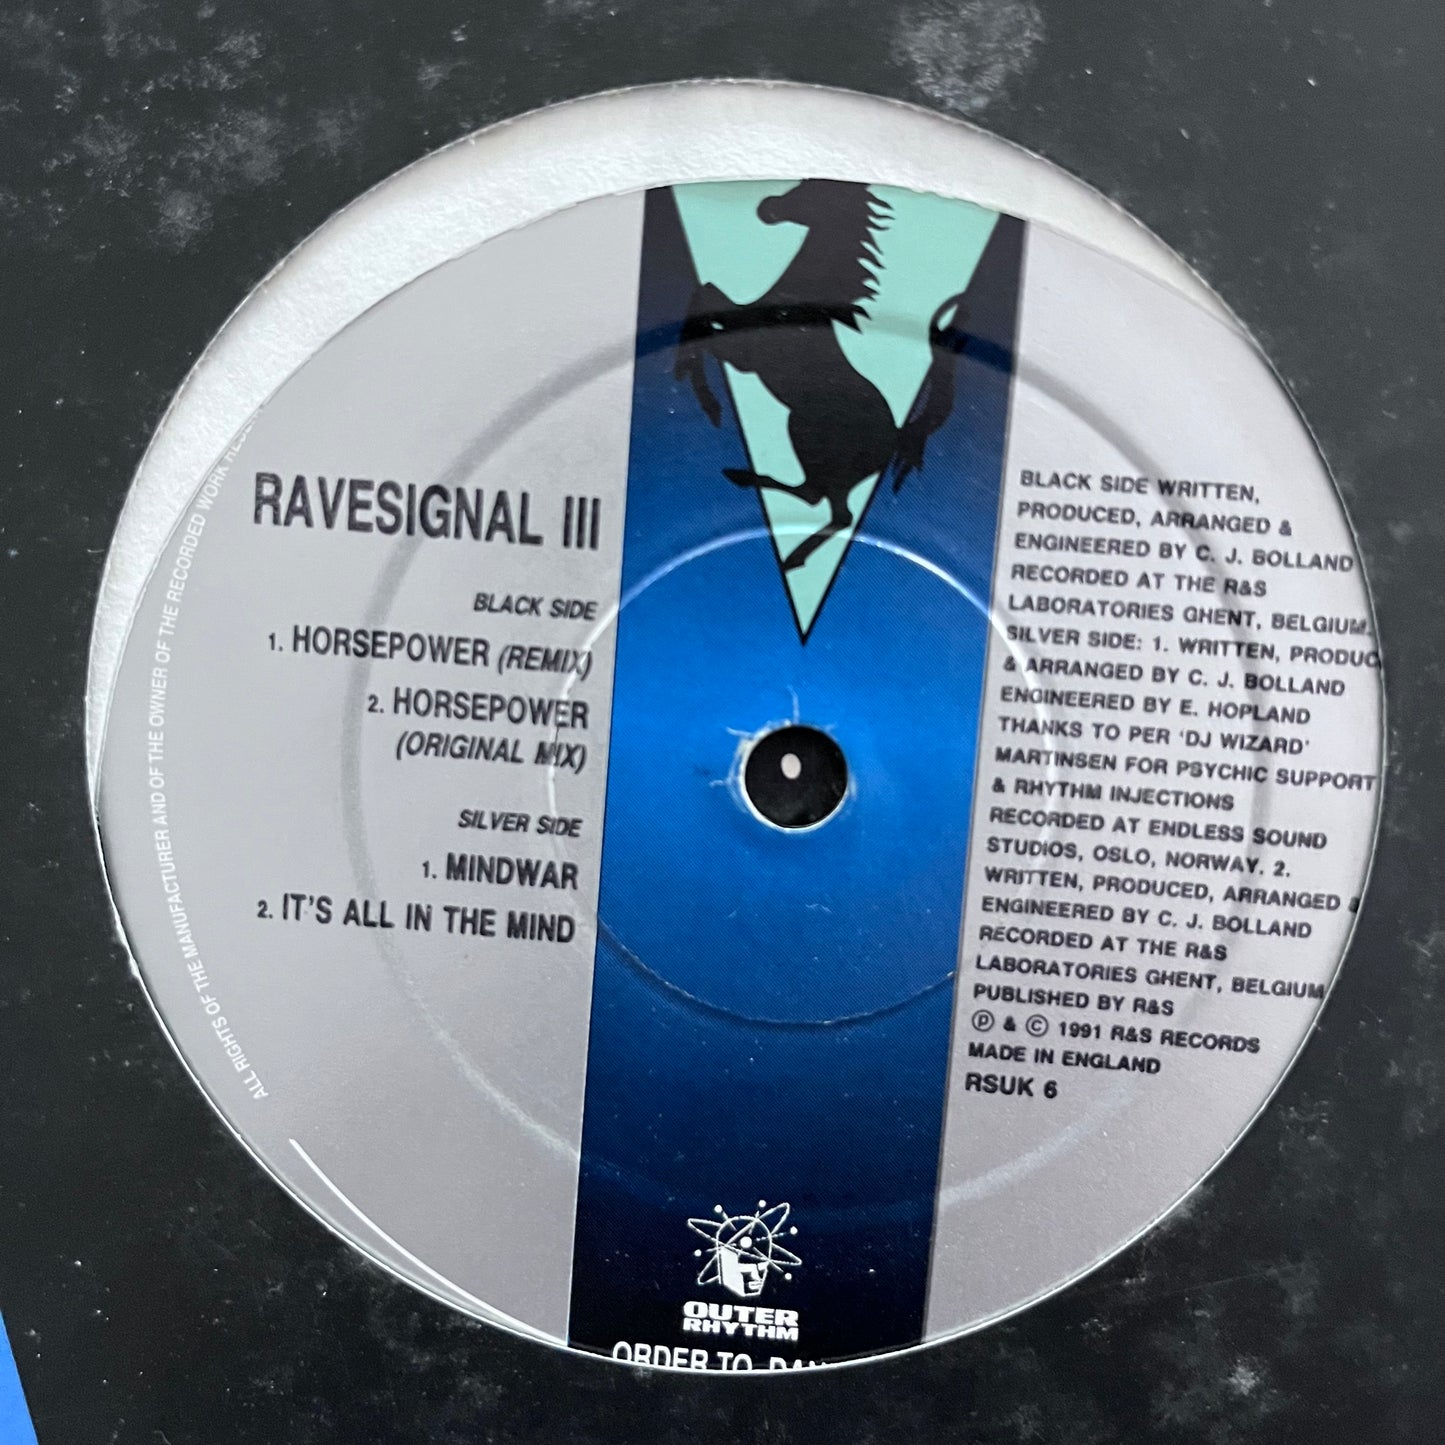 CJ Bolland “Ravesignal III” EP 3 Track 12inch Vinyl Record on R&S Records